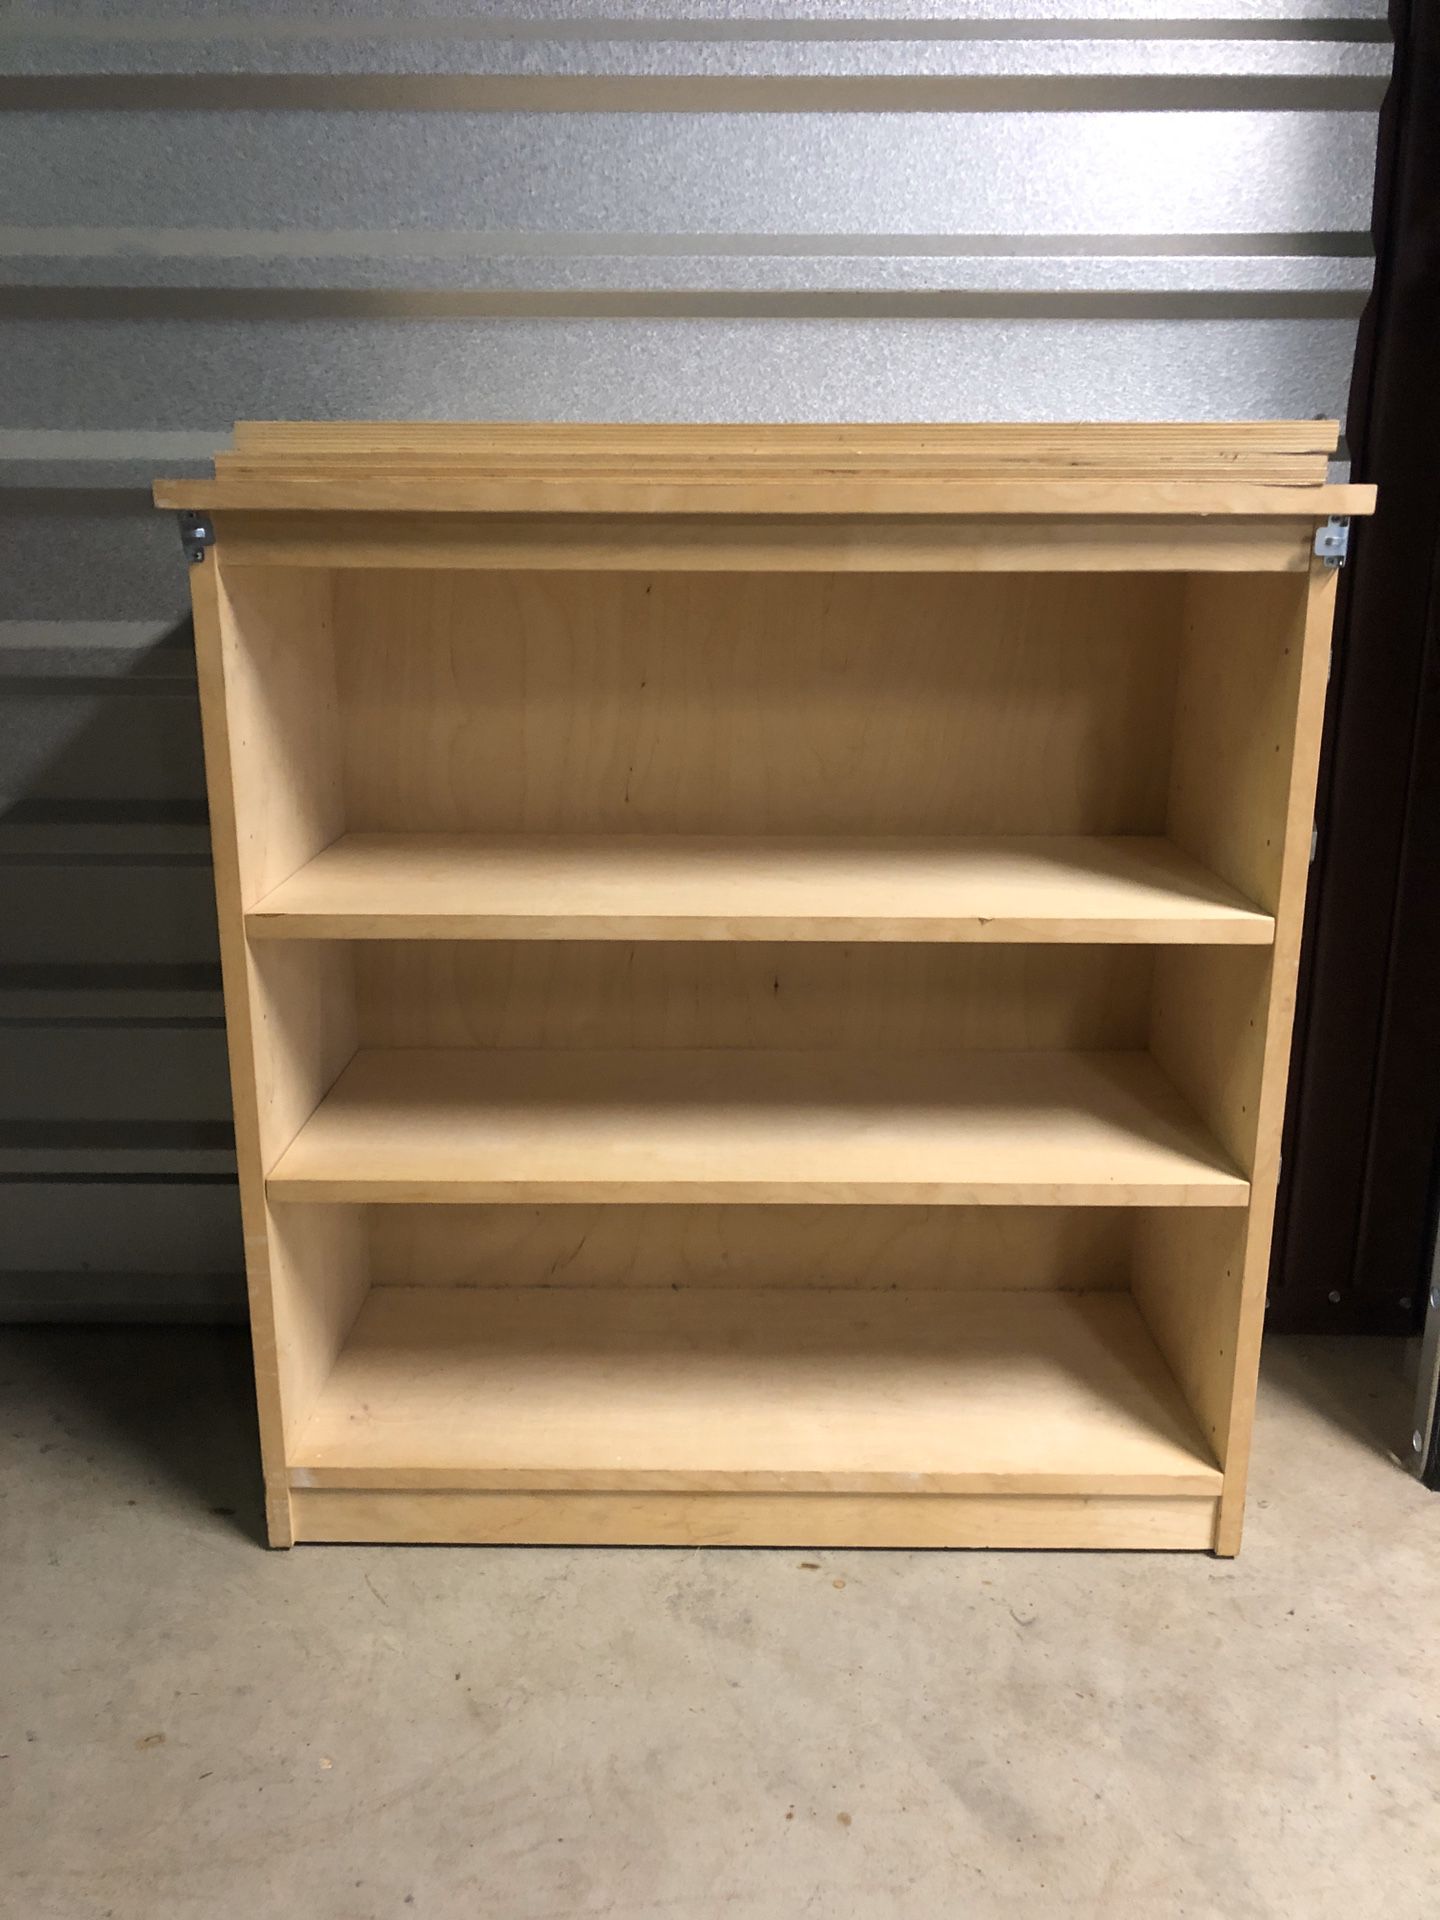 Small wooden bookshelf